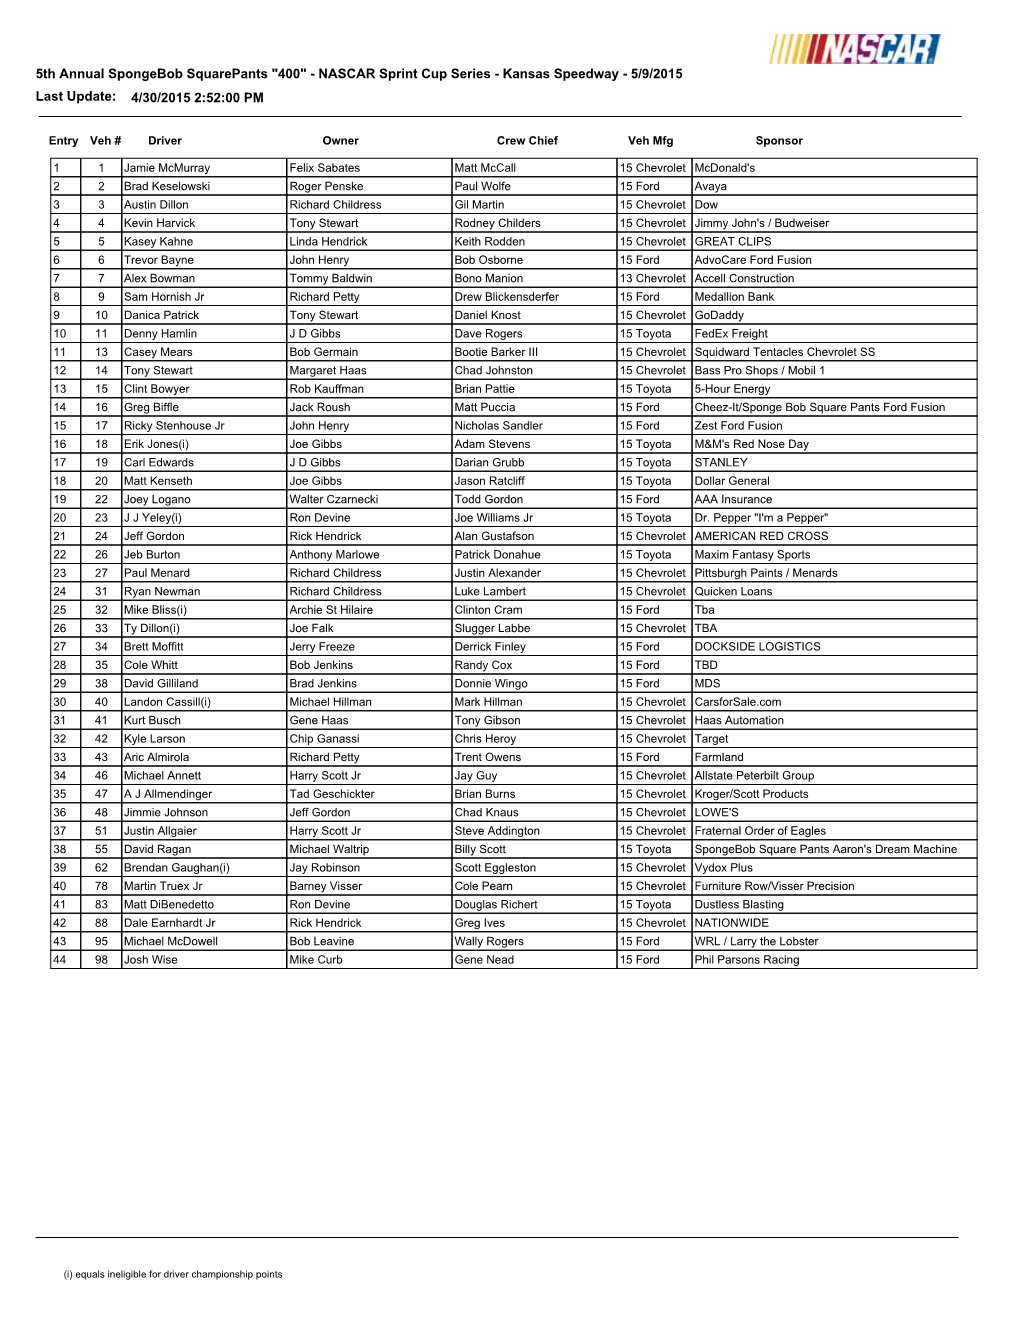 Kansas Spongbob Squarepants 400 NASCAR Entry List